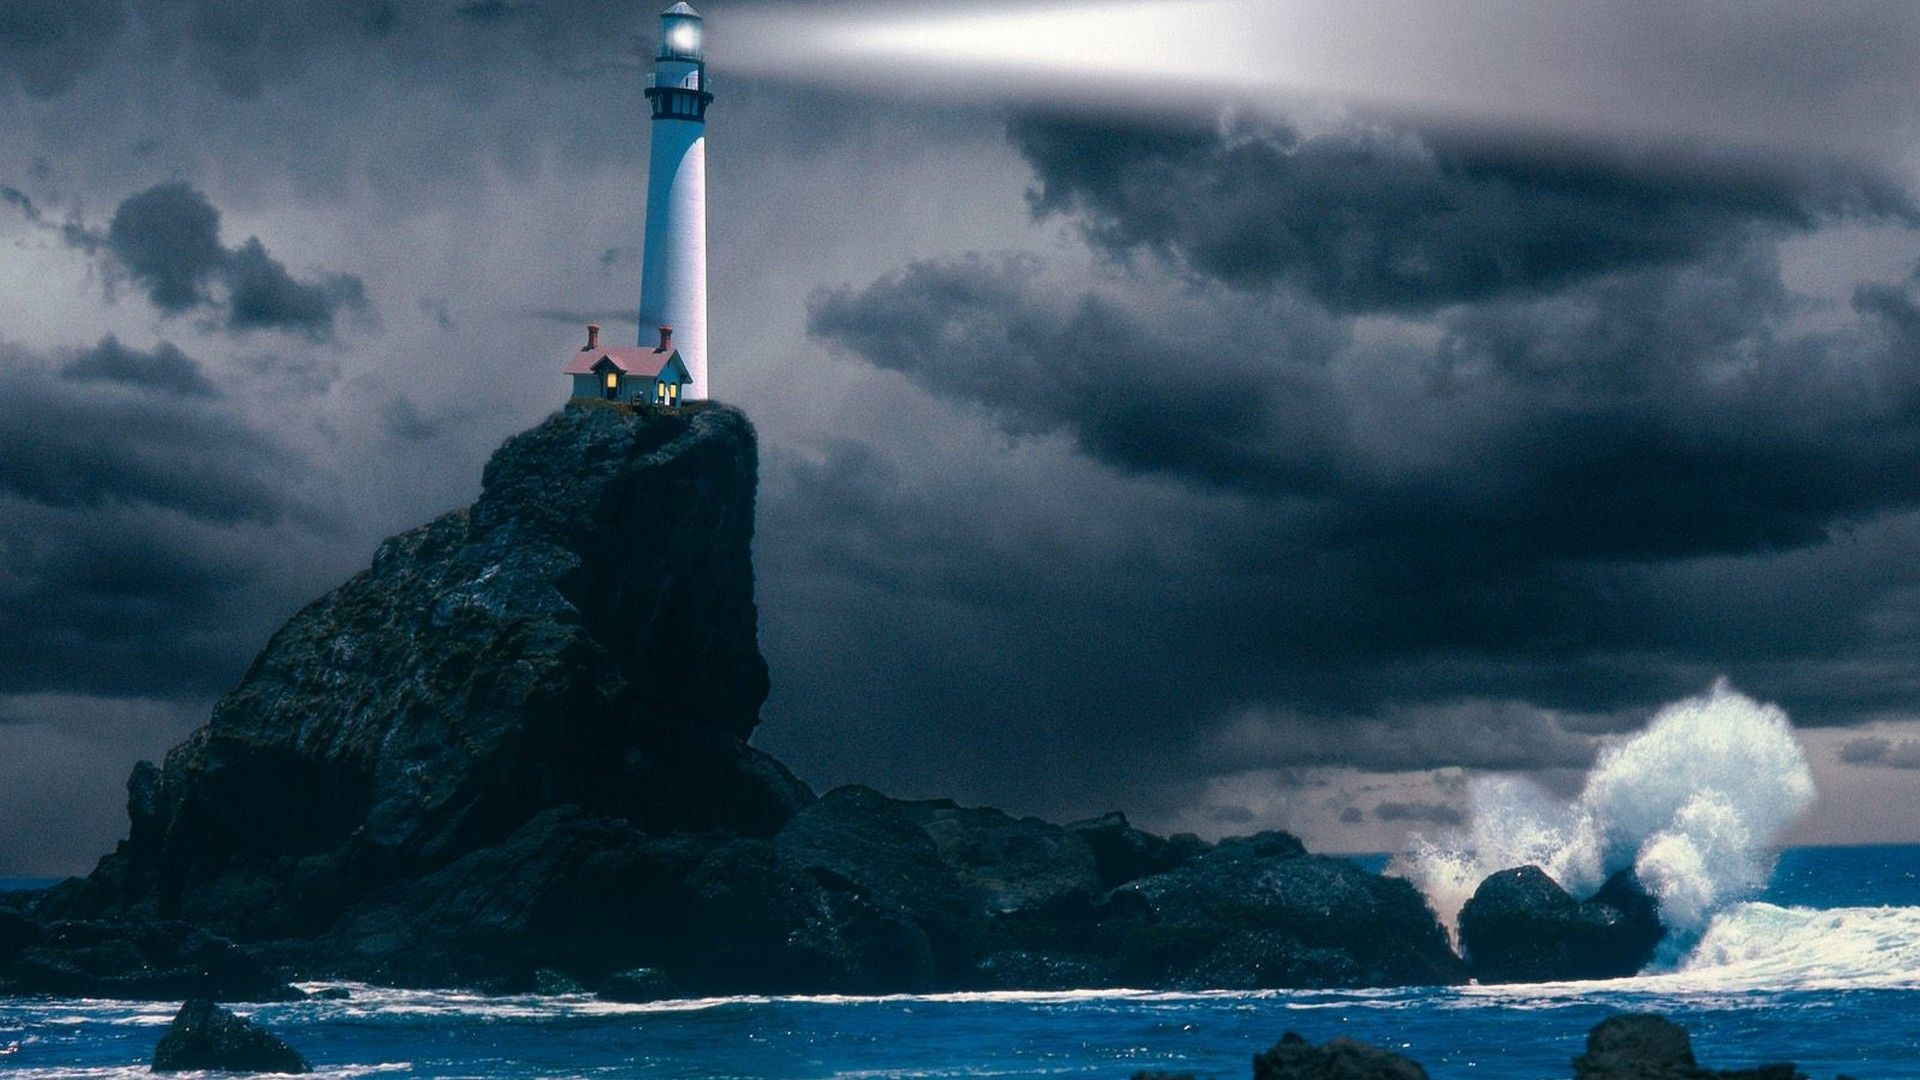 lighthouse | Lighthouse at night wallpaper | BEACONS | Pinterest ...